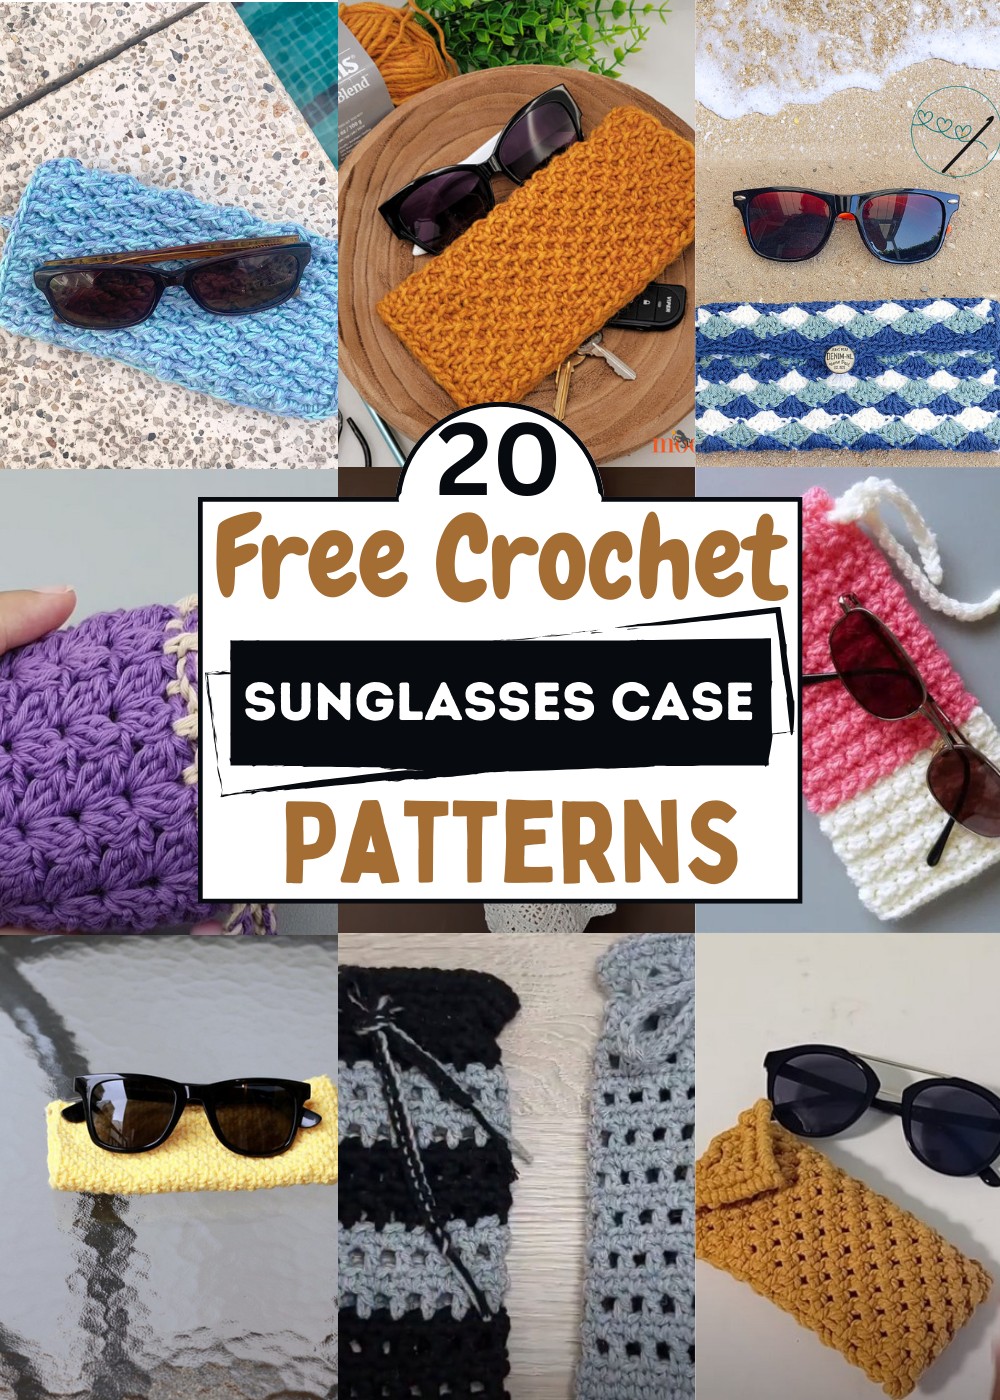 Crochet Sunglasses Case Patterns